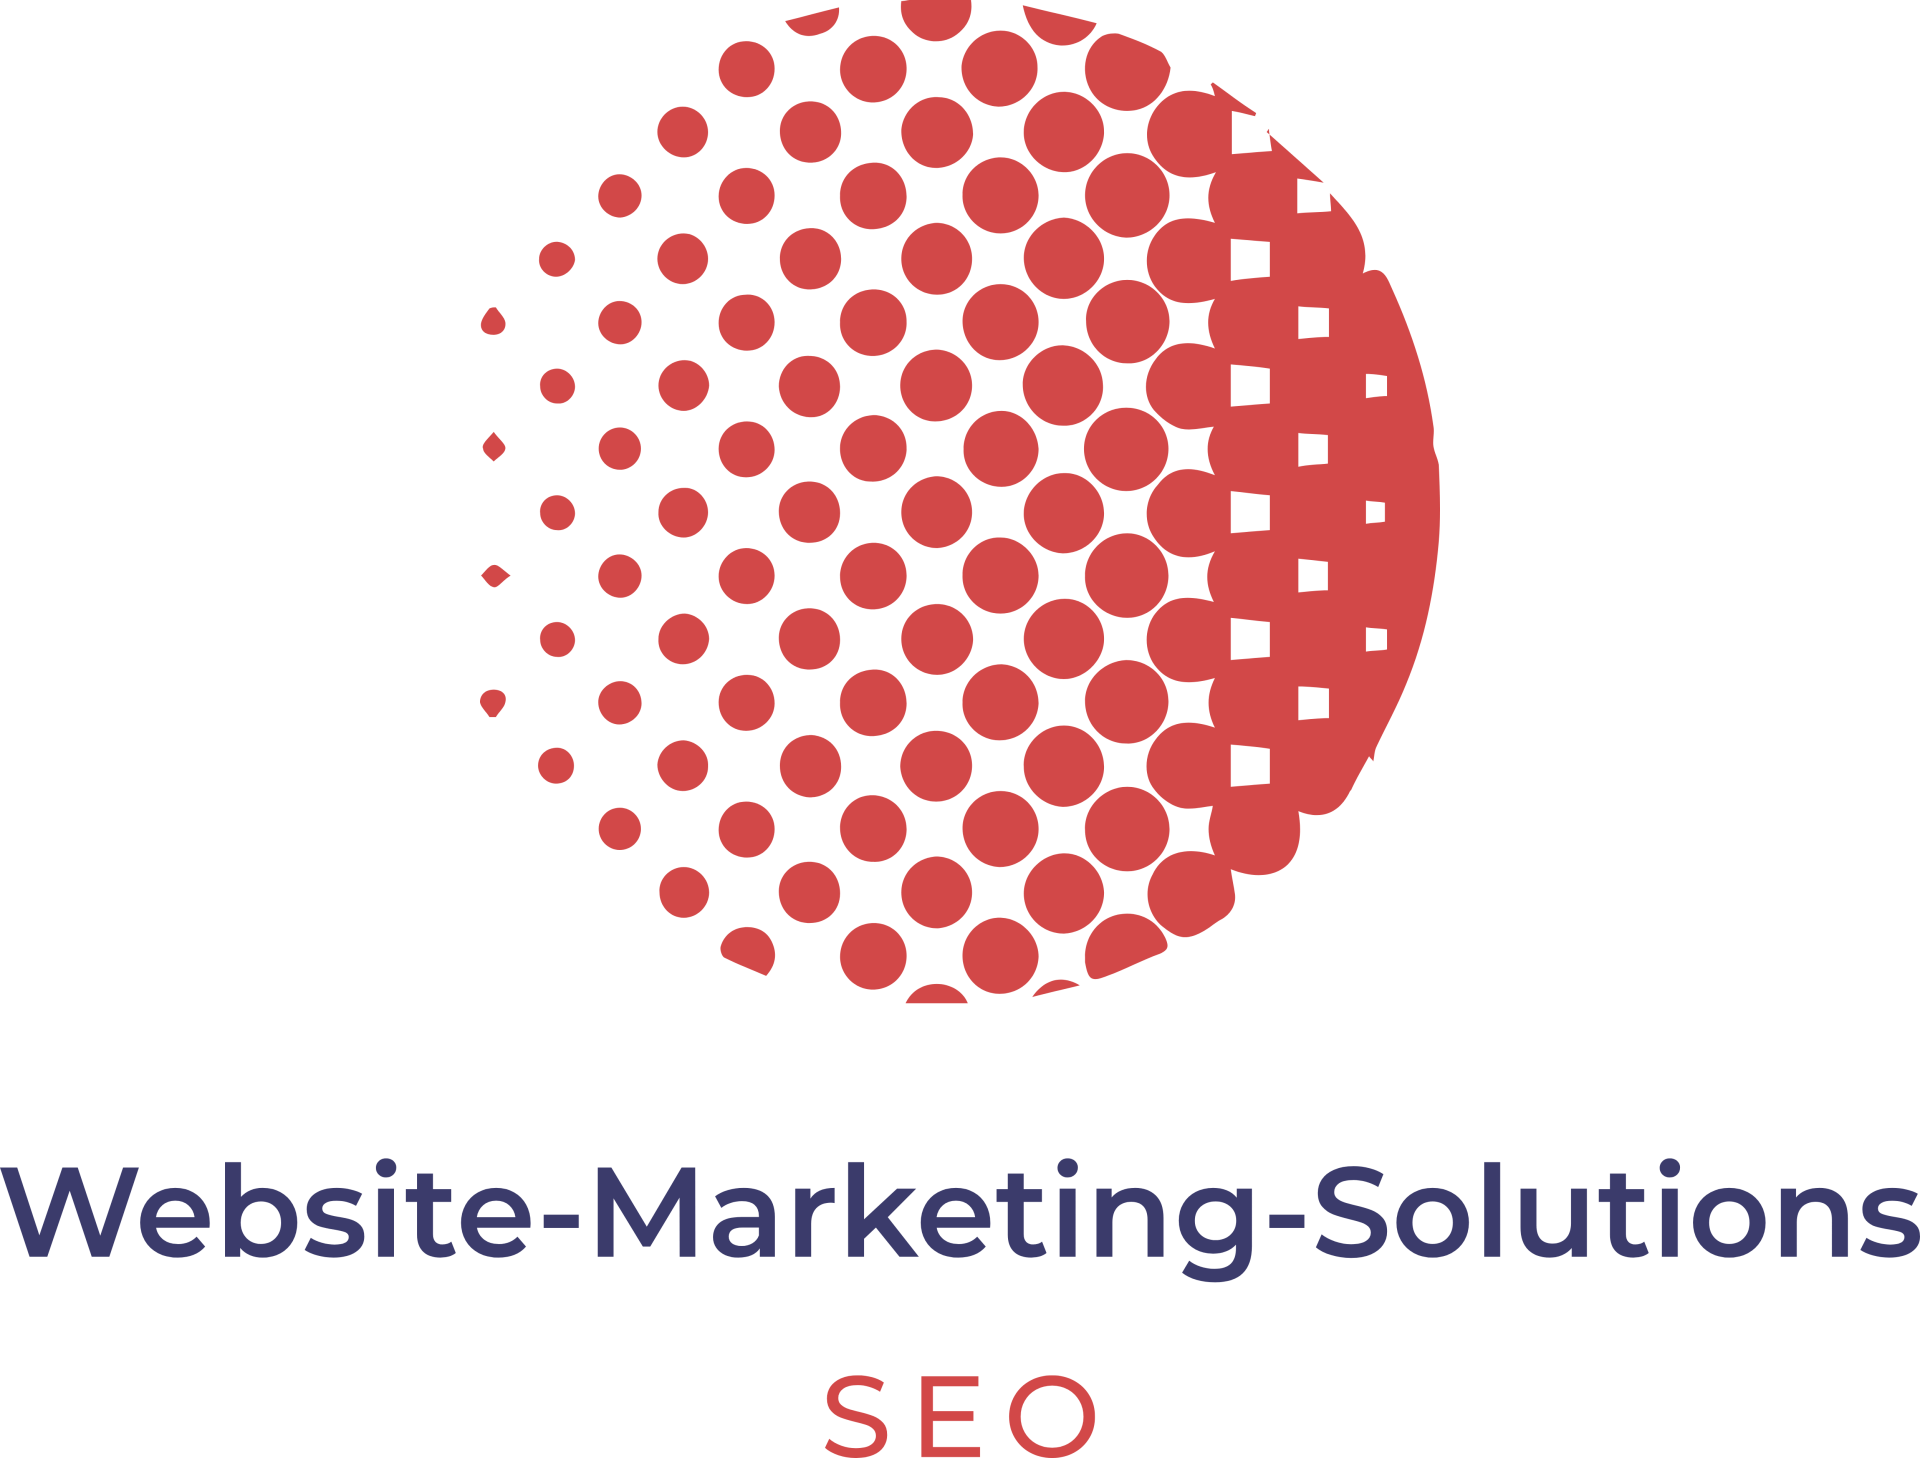 Website-Marketing-Solutions SEO